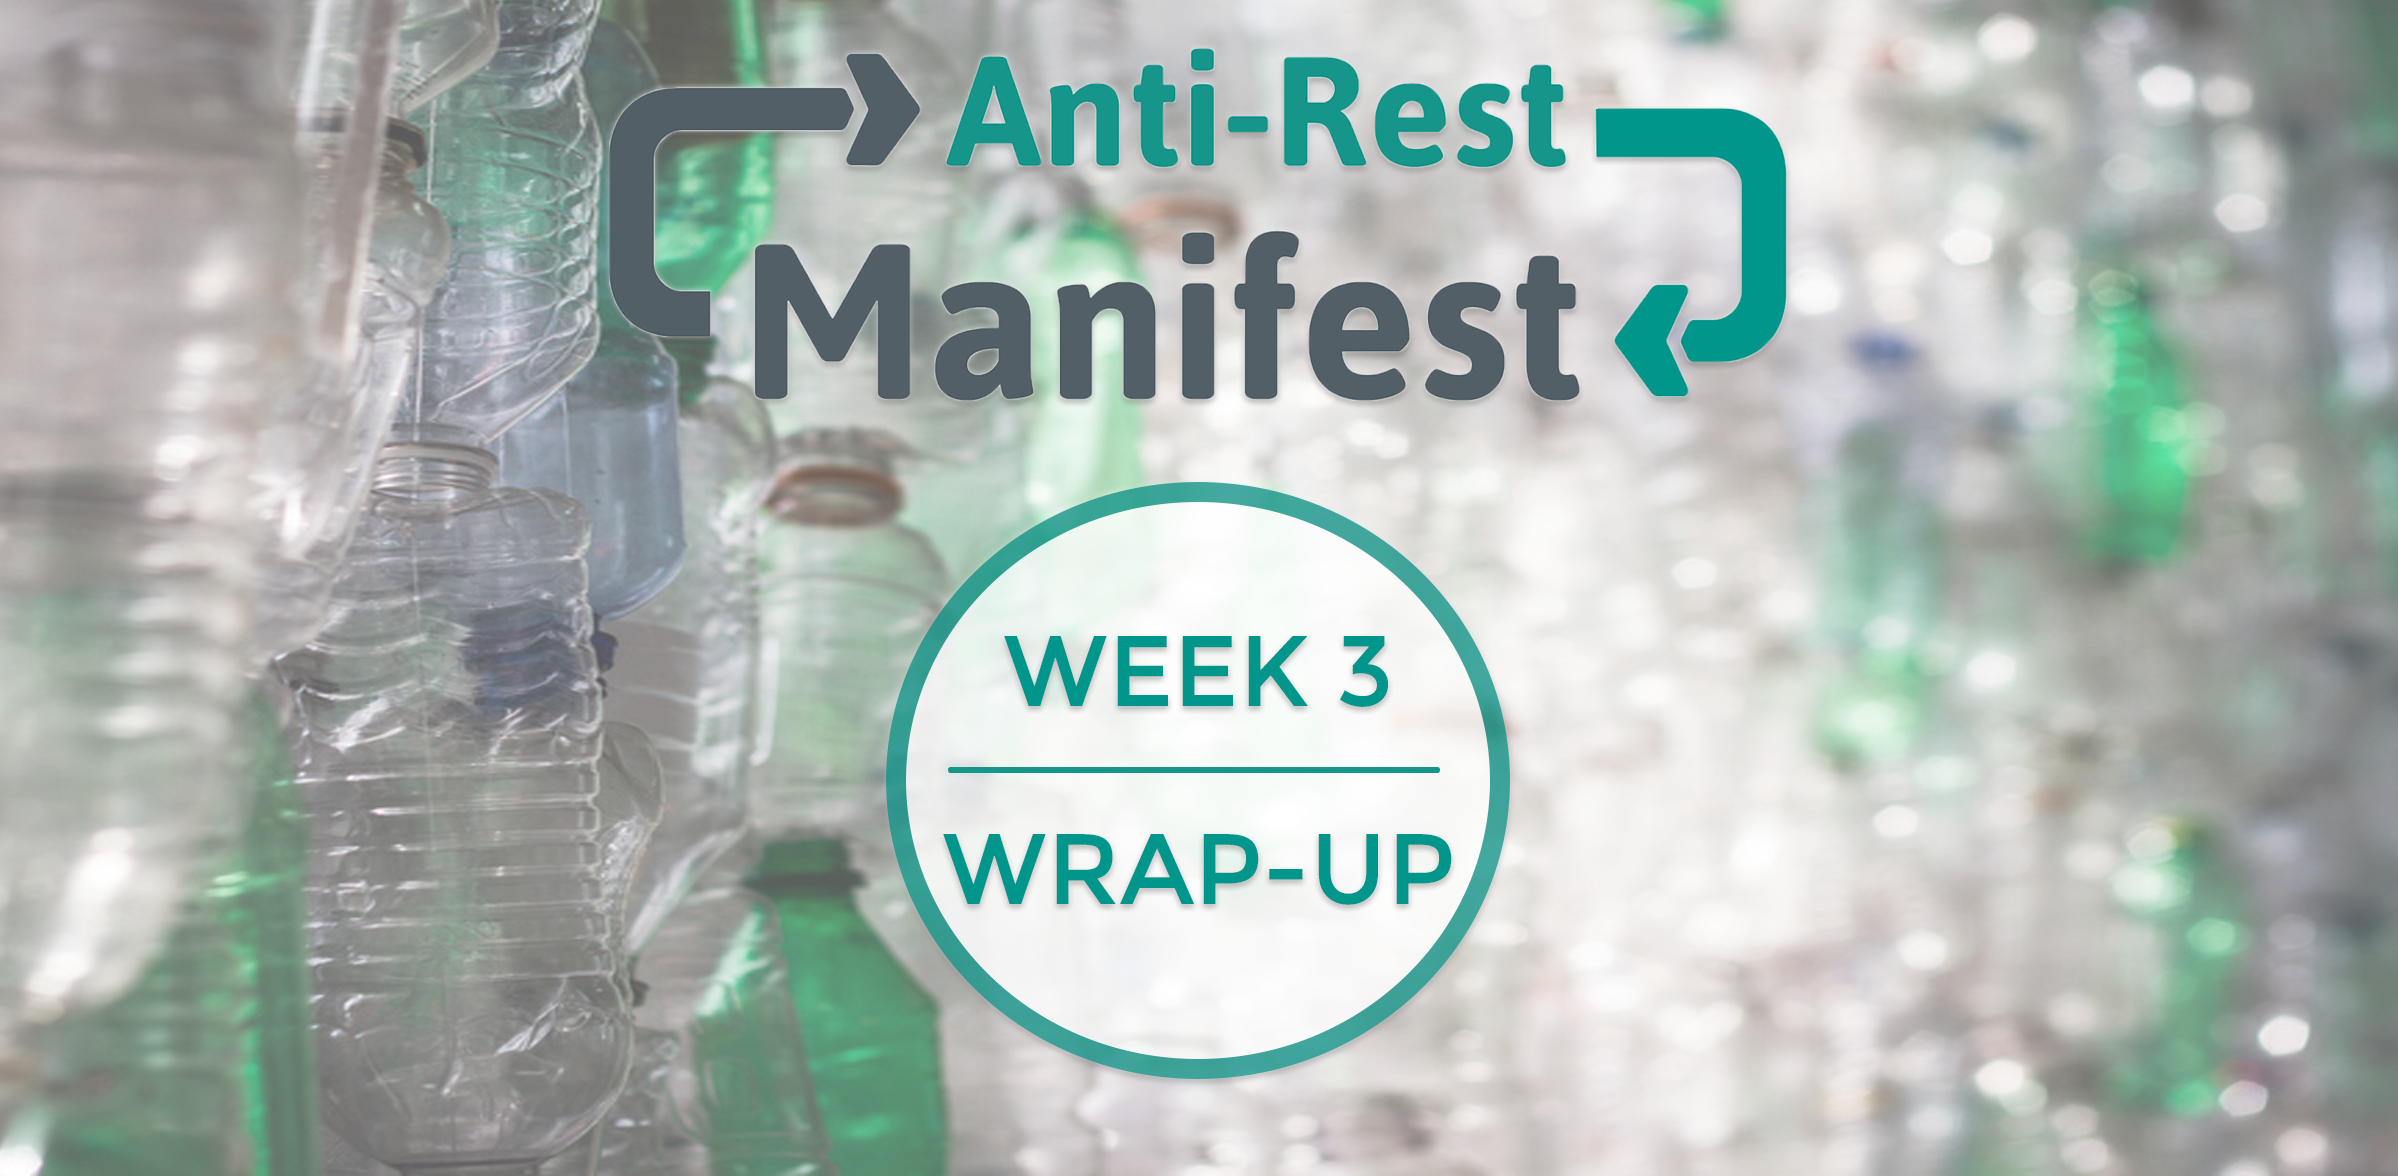 Anti-Rest Manifest